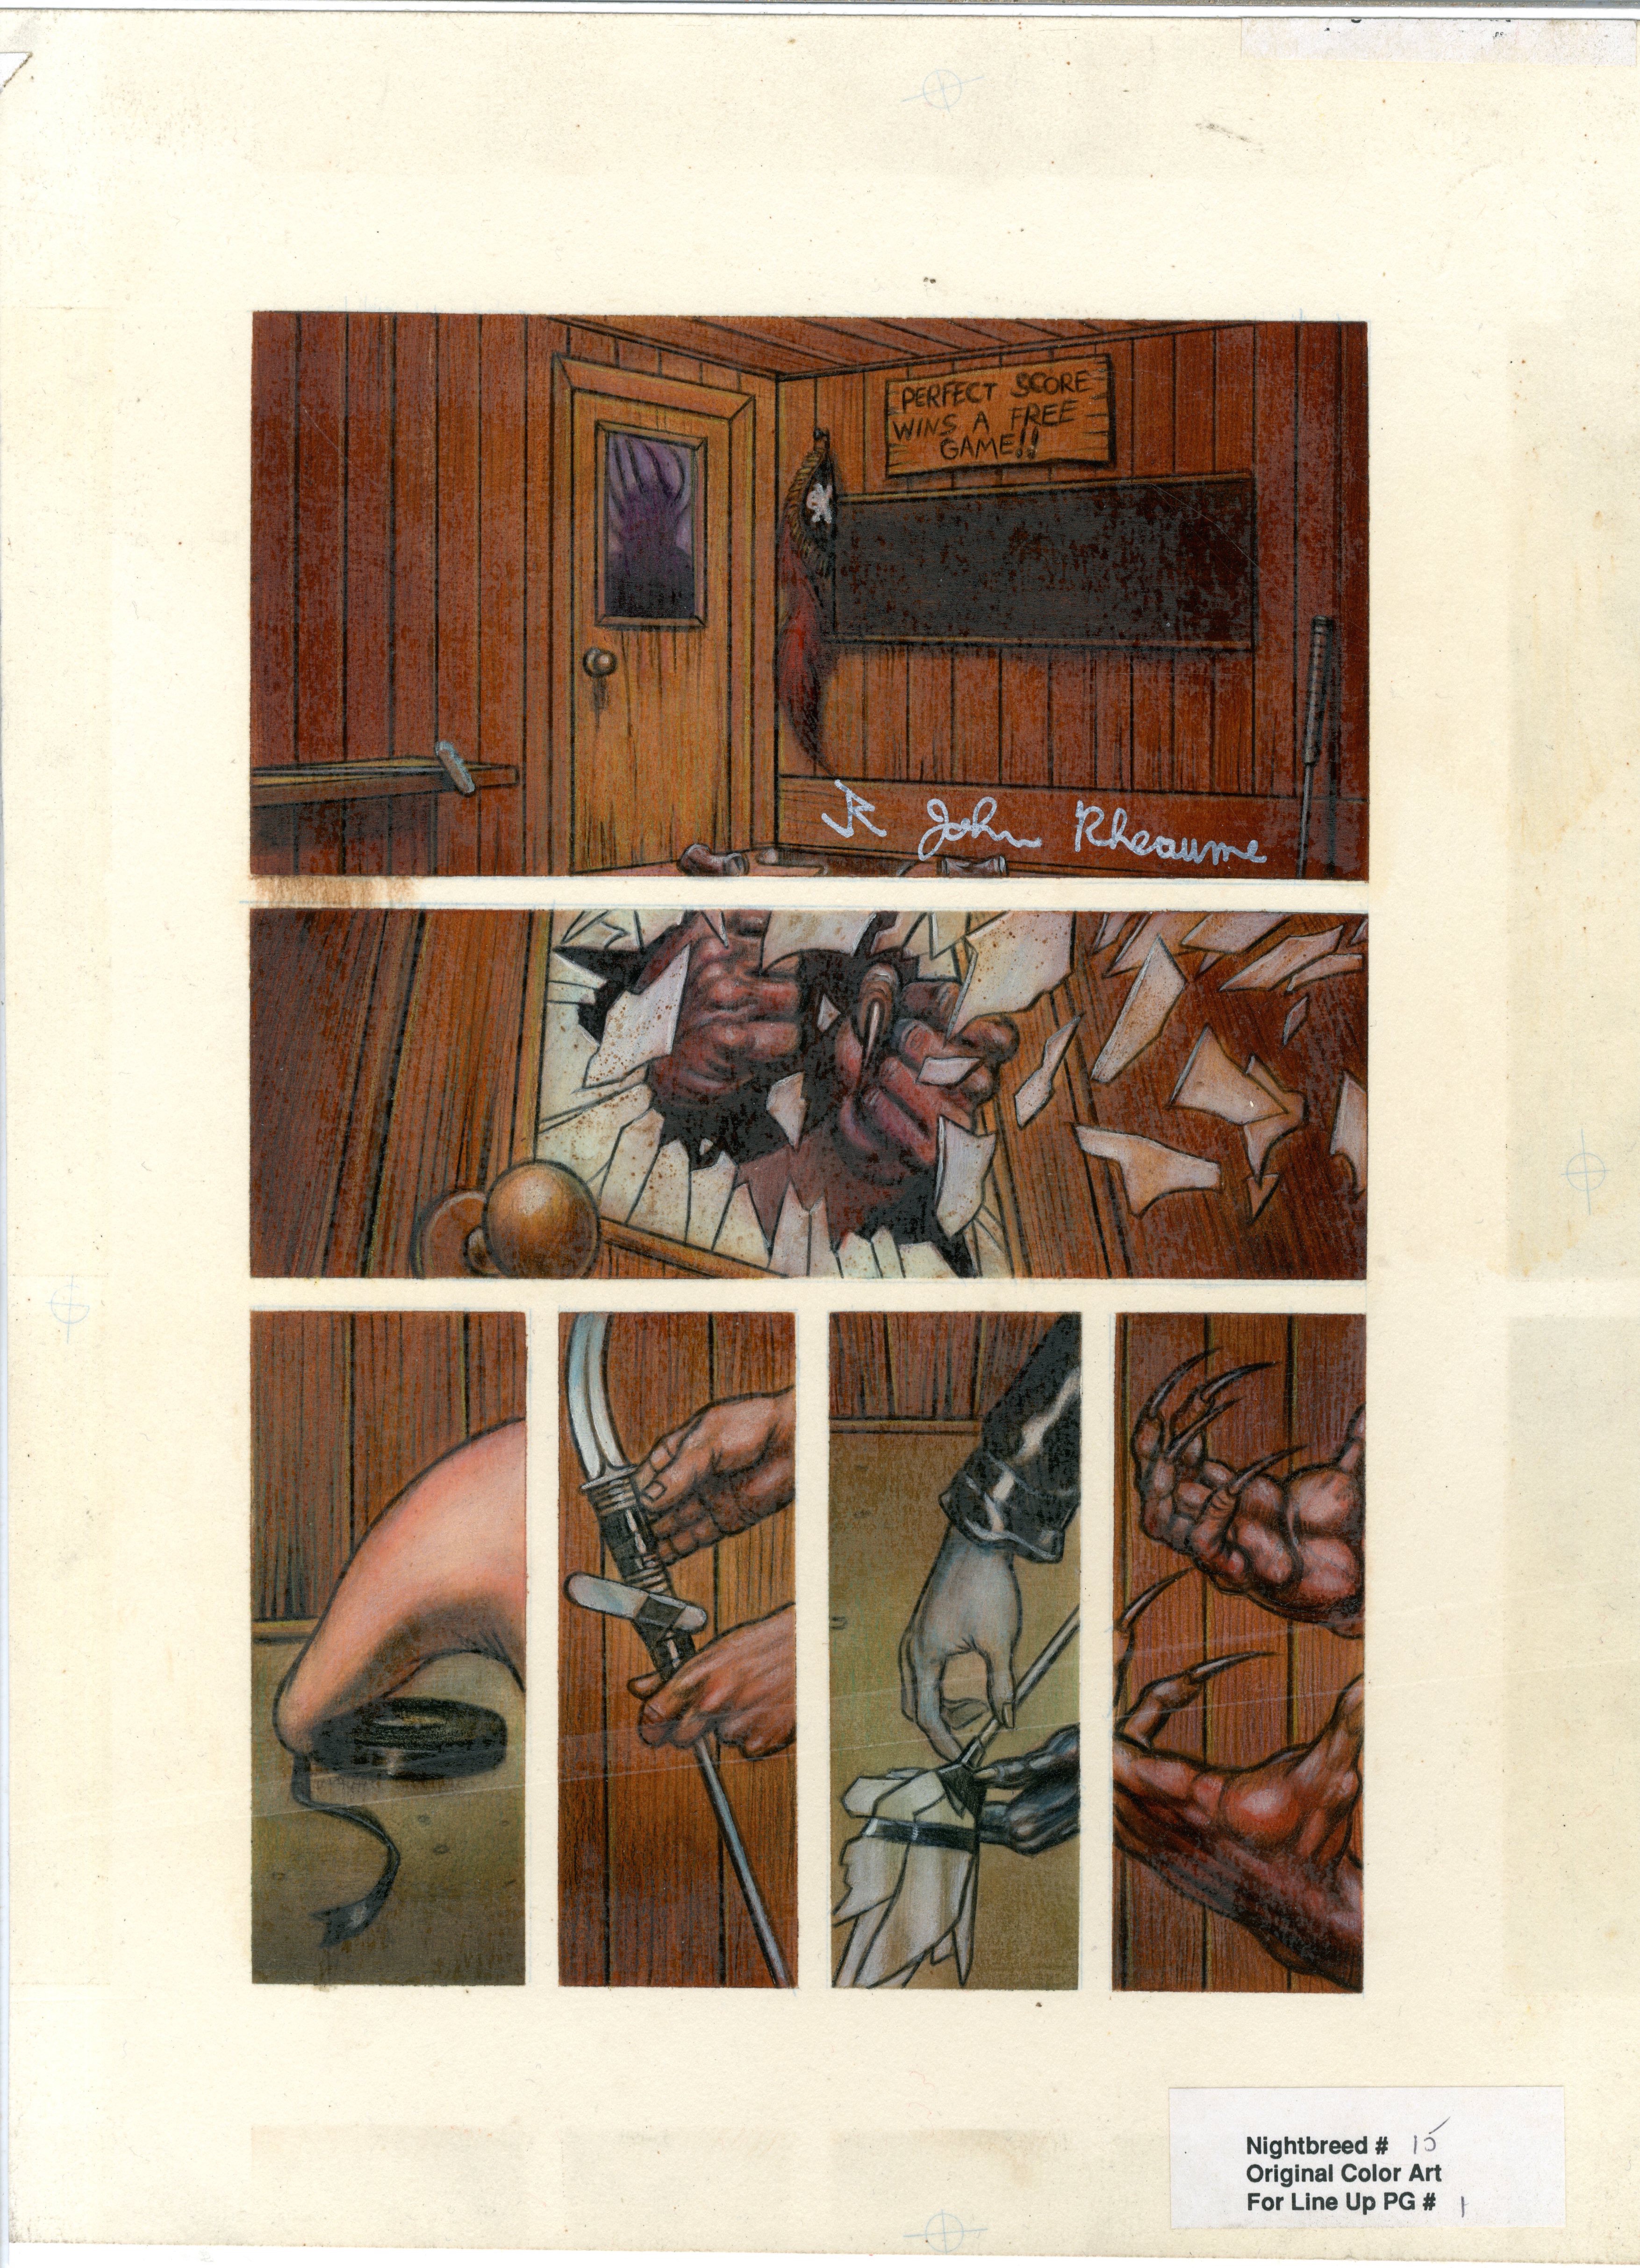 Nightbreed #15 Page 1 John Rheaume Original Art - Primary